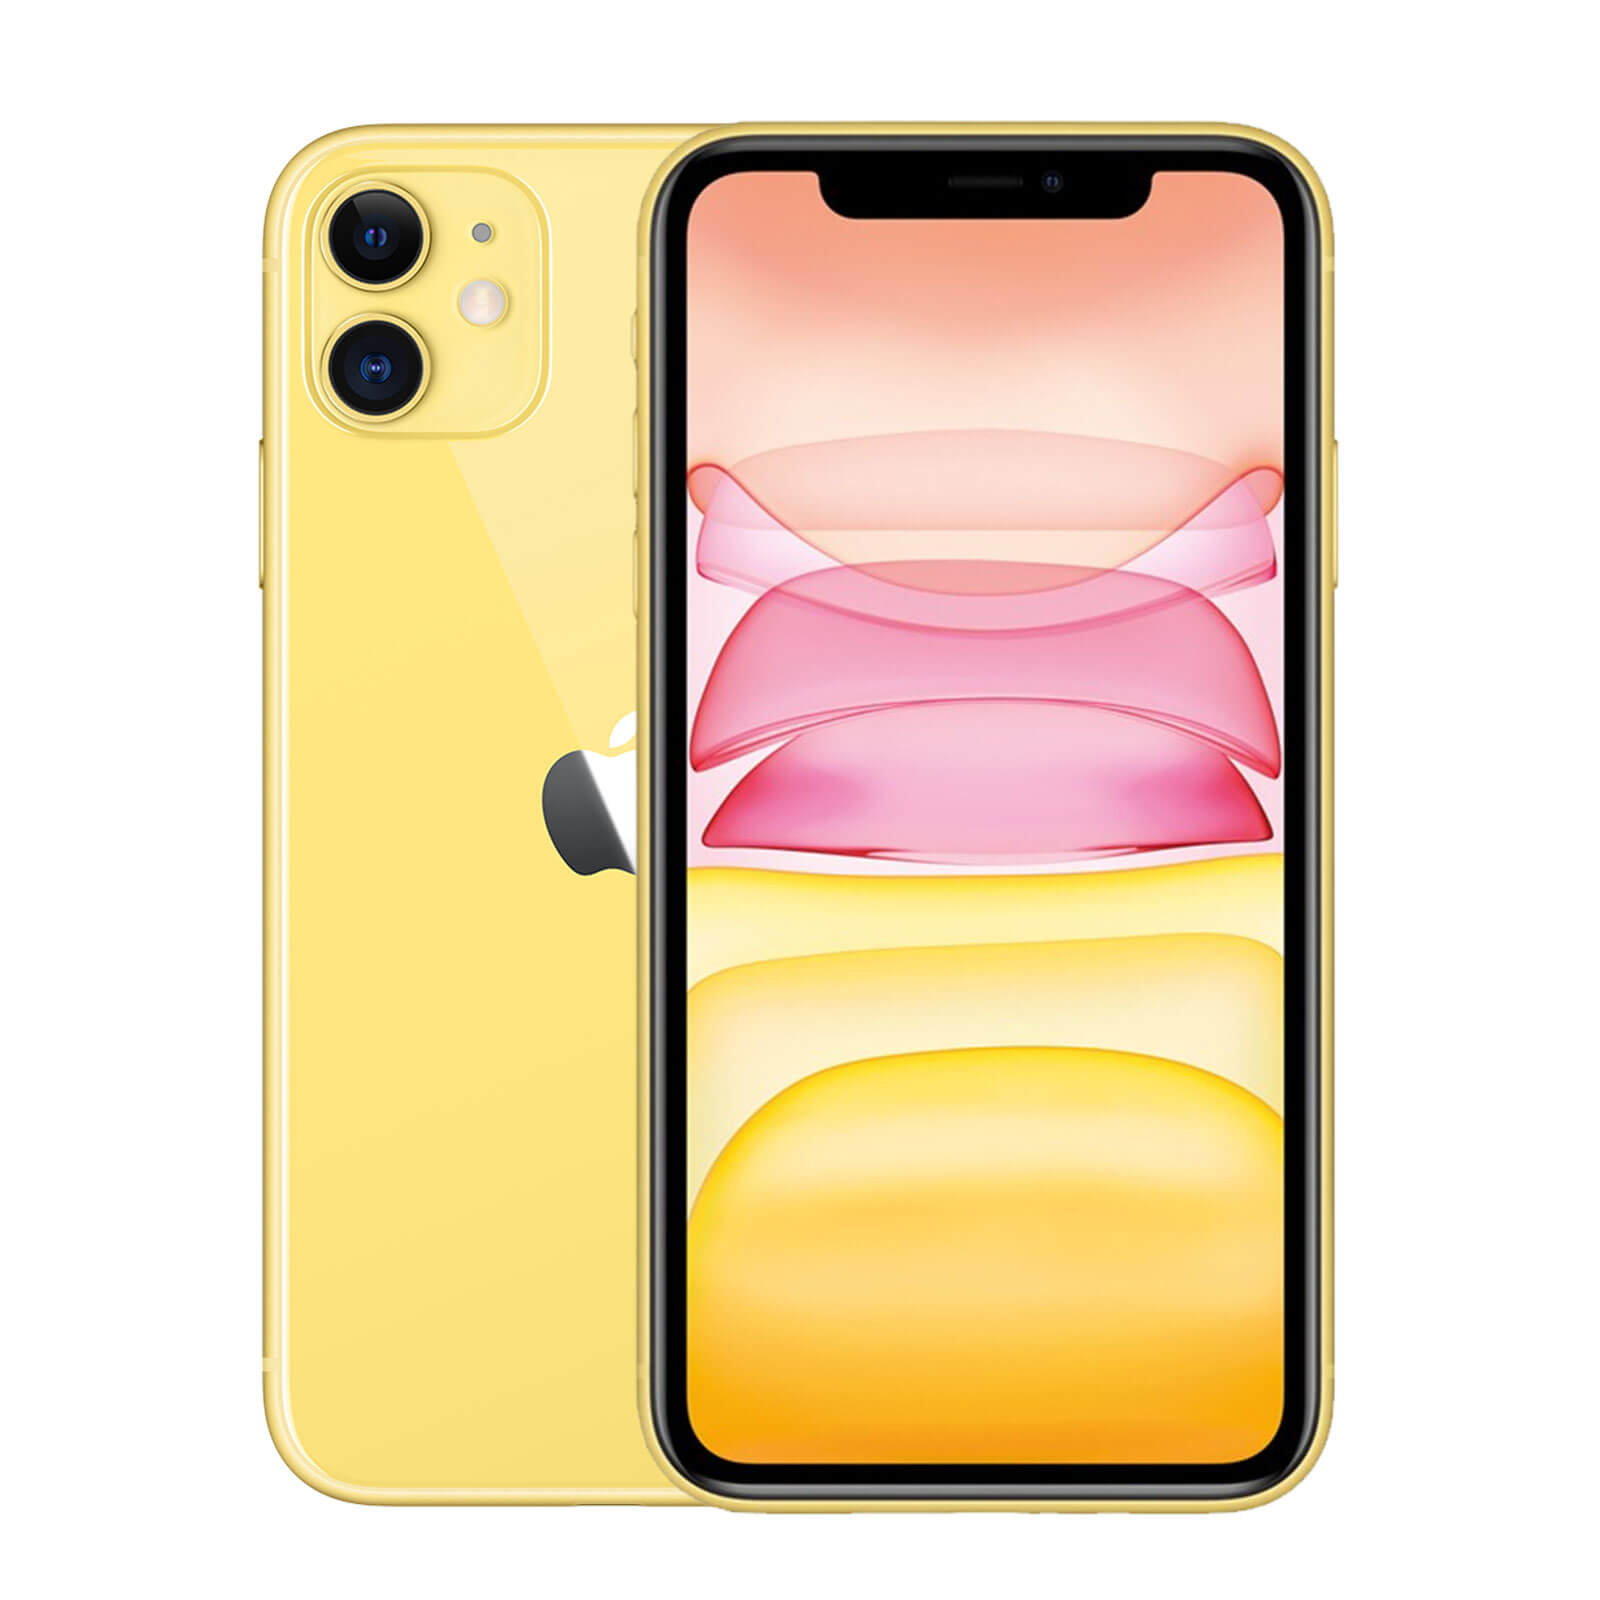 Apple iPhone 11 256GB Yellow Very Good - Unlocked